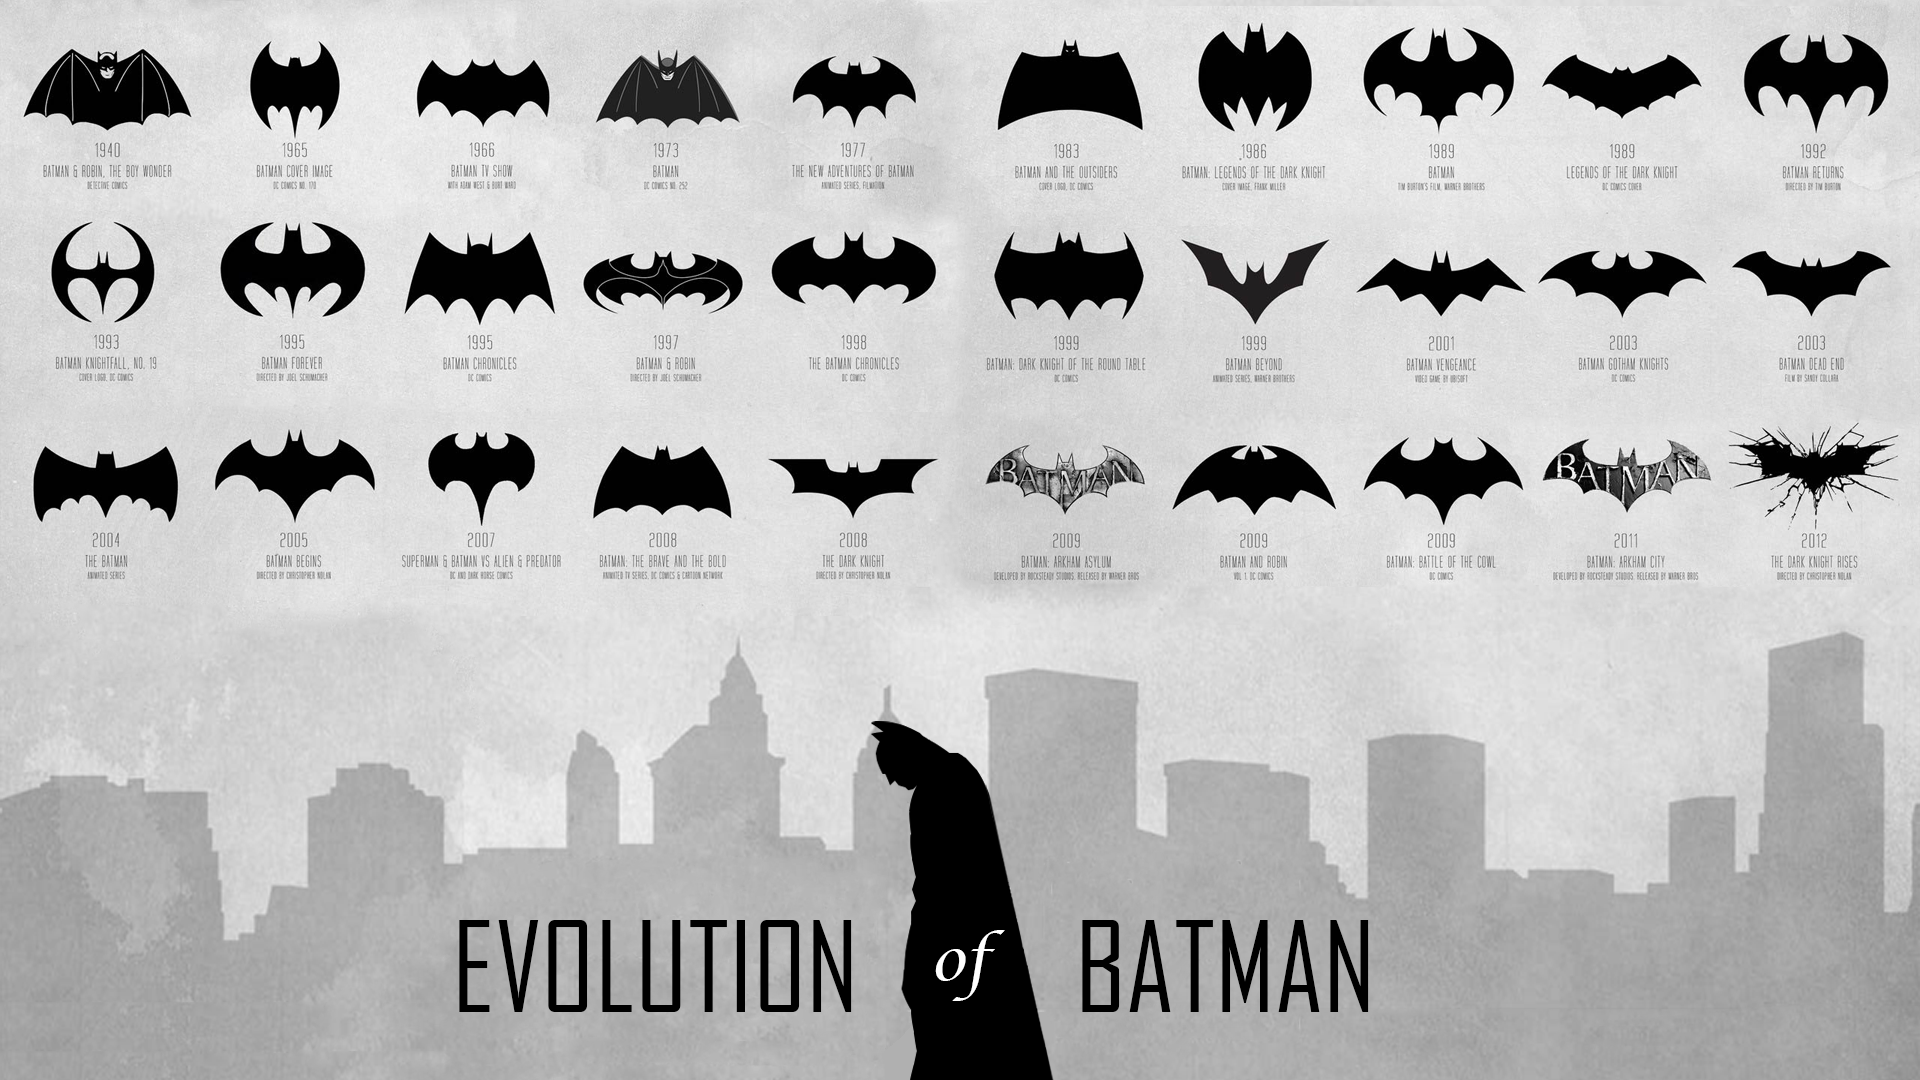 All batman logos past and present